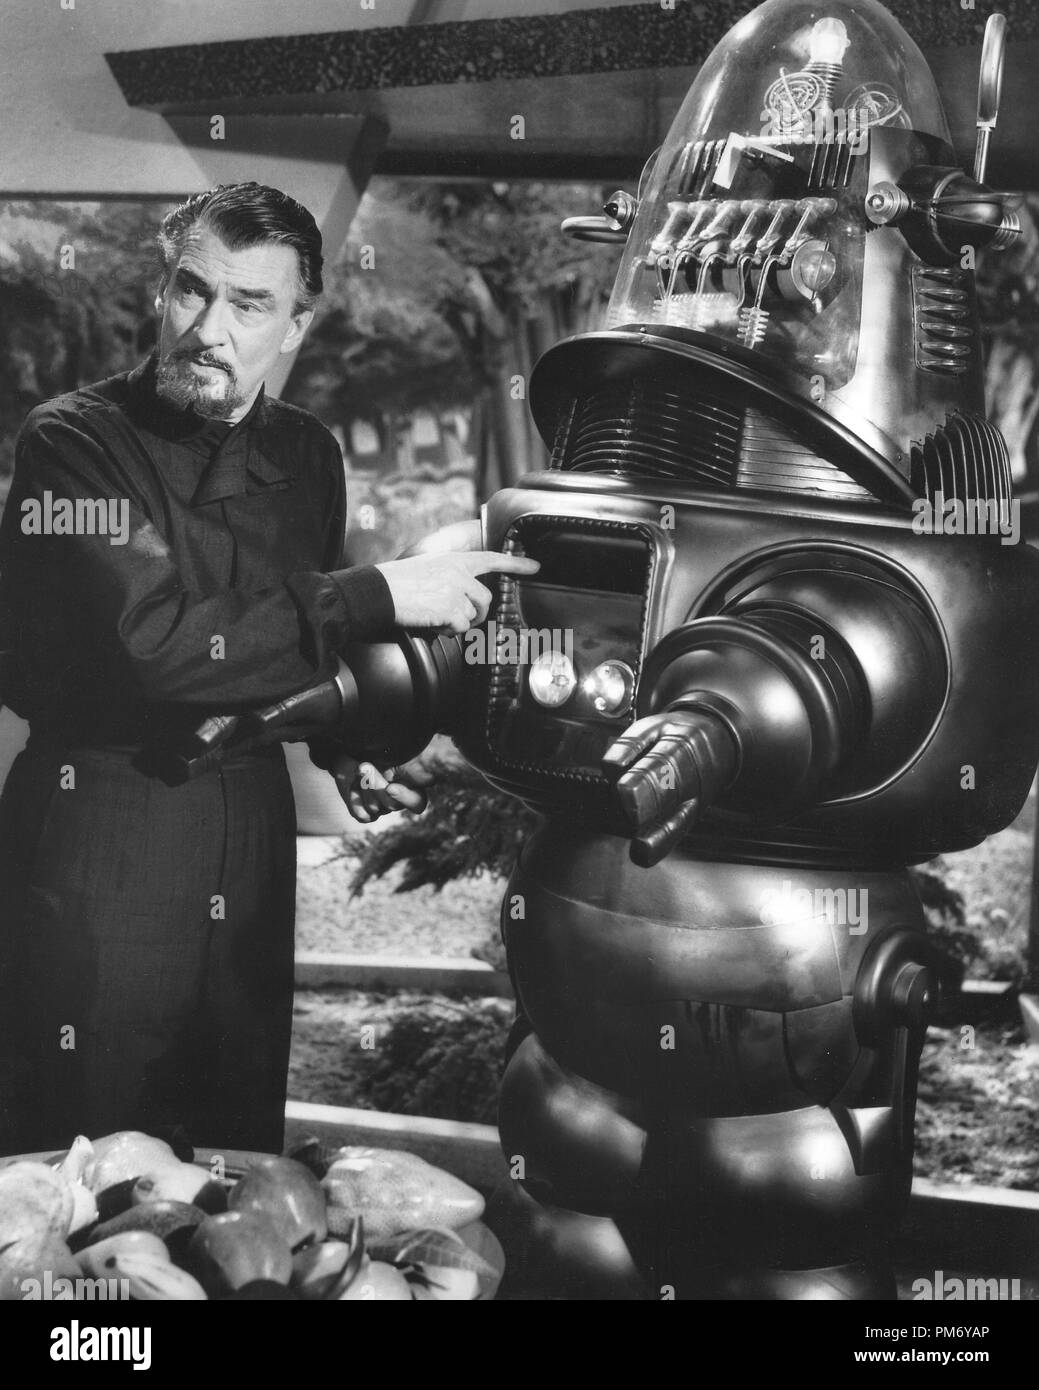 robby the robot twilight zone